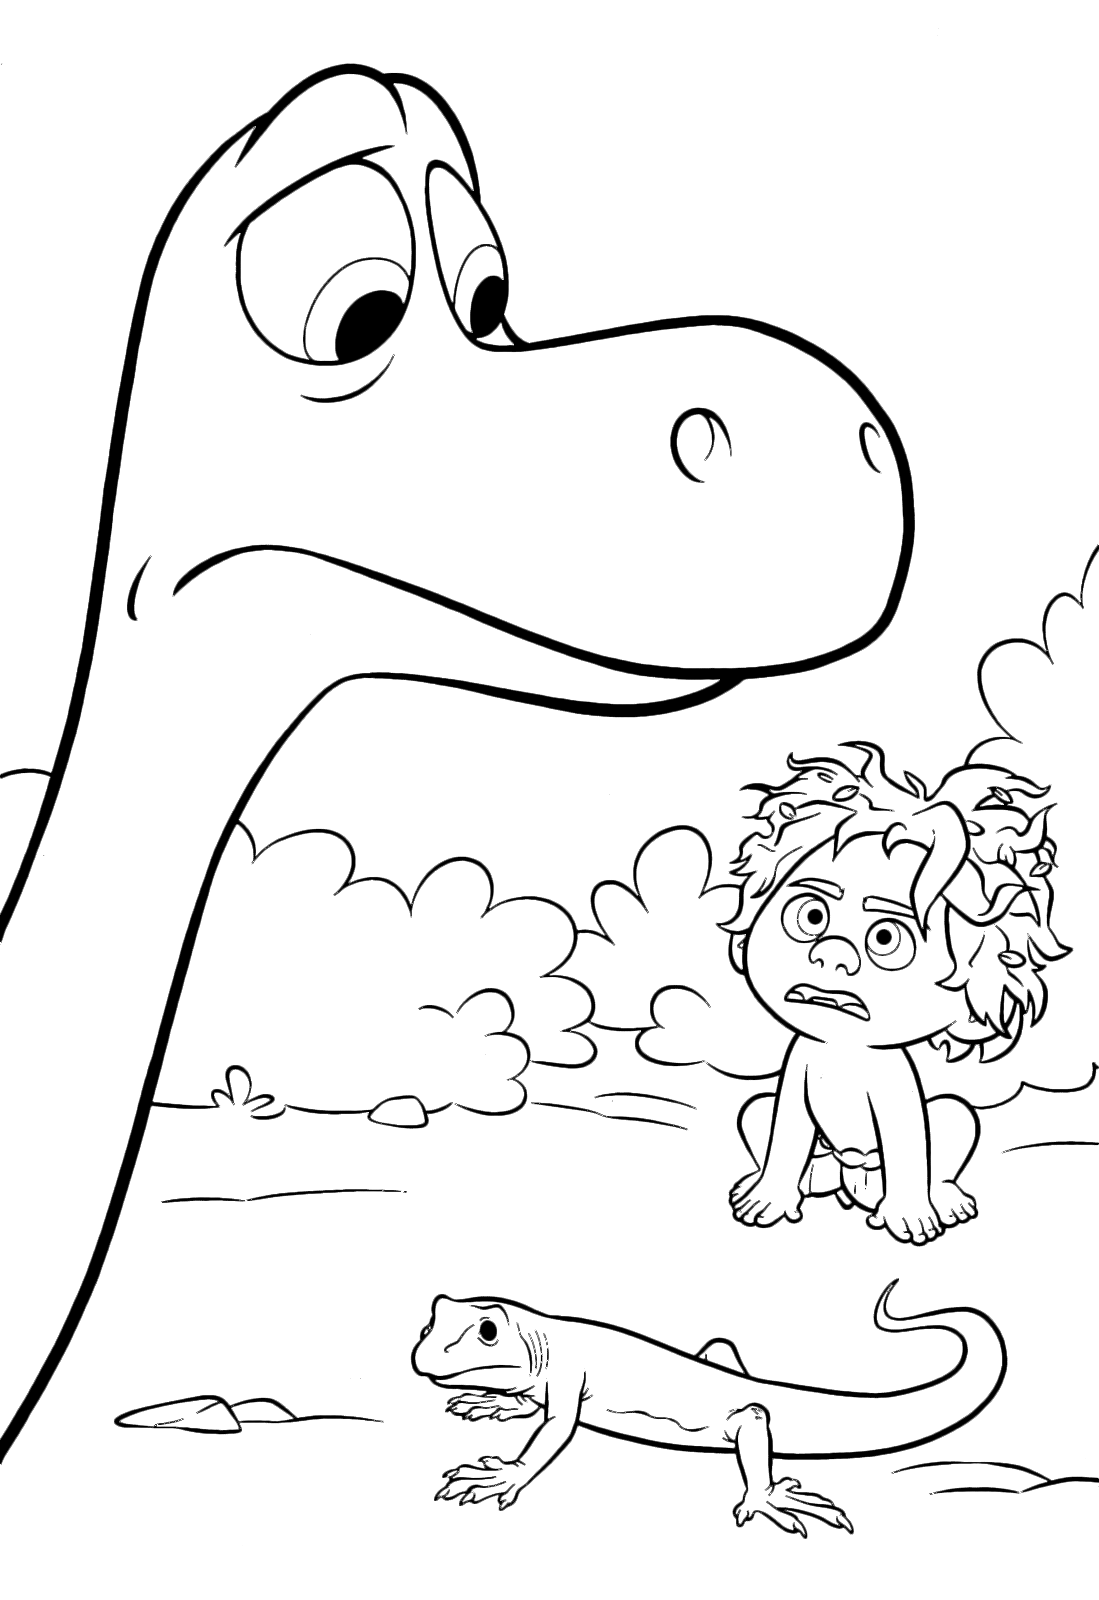 The Good Dinosaur - Arlo looks scared the lizard